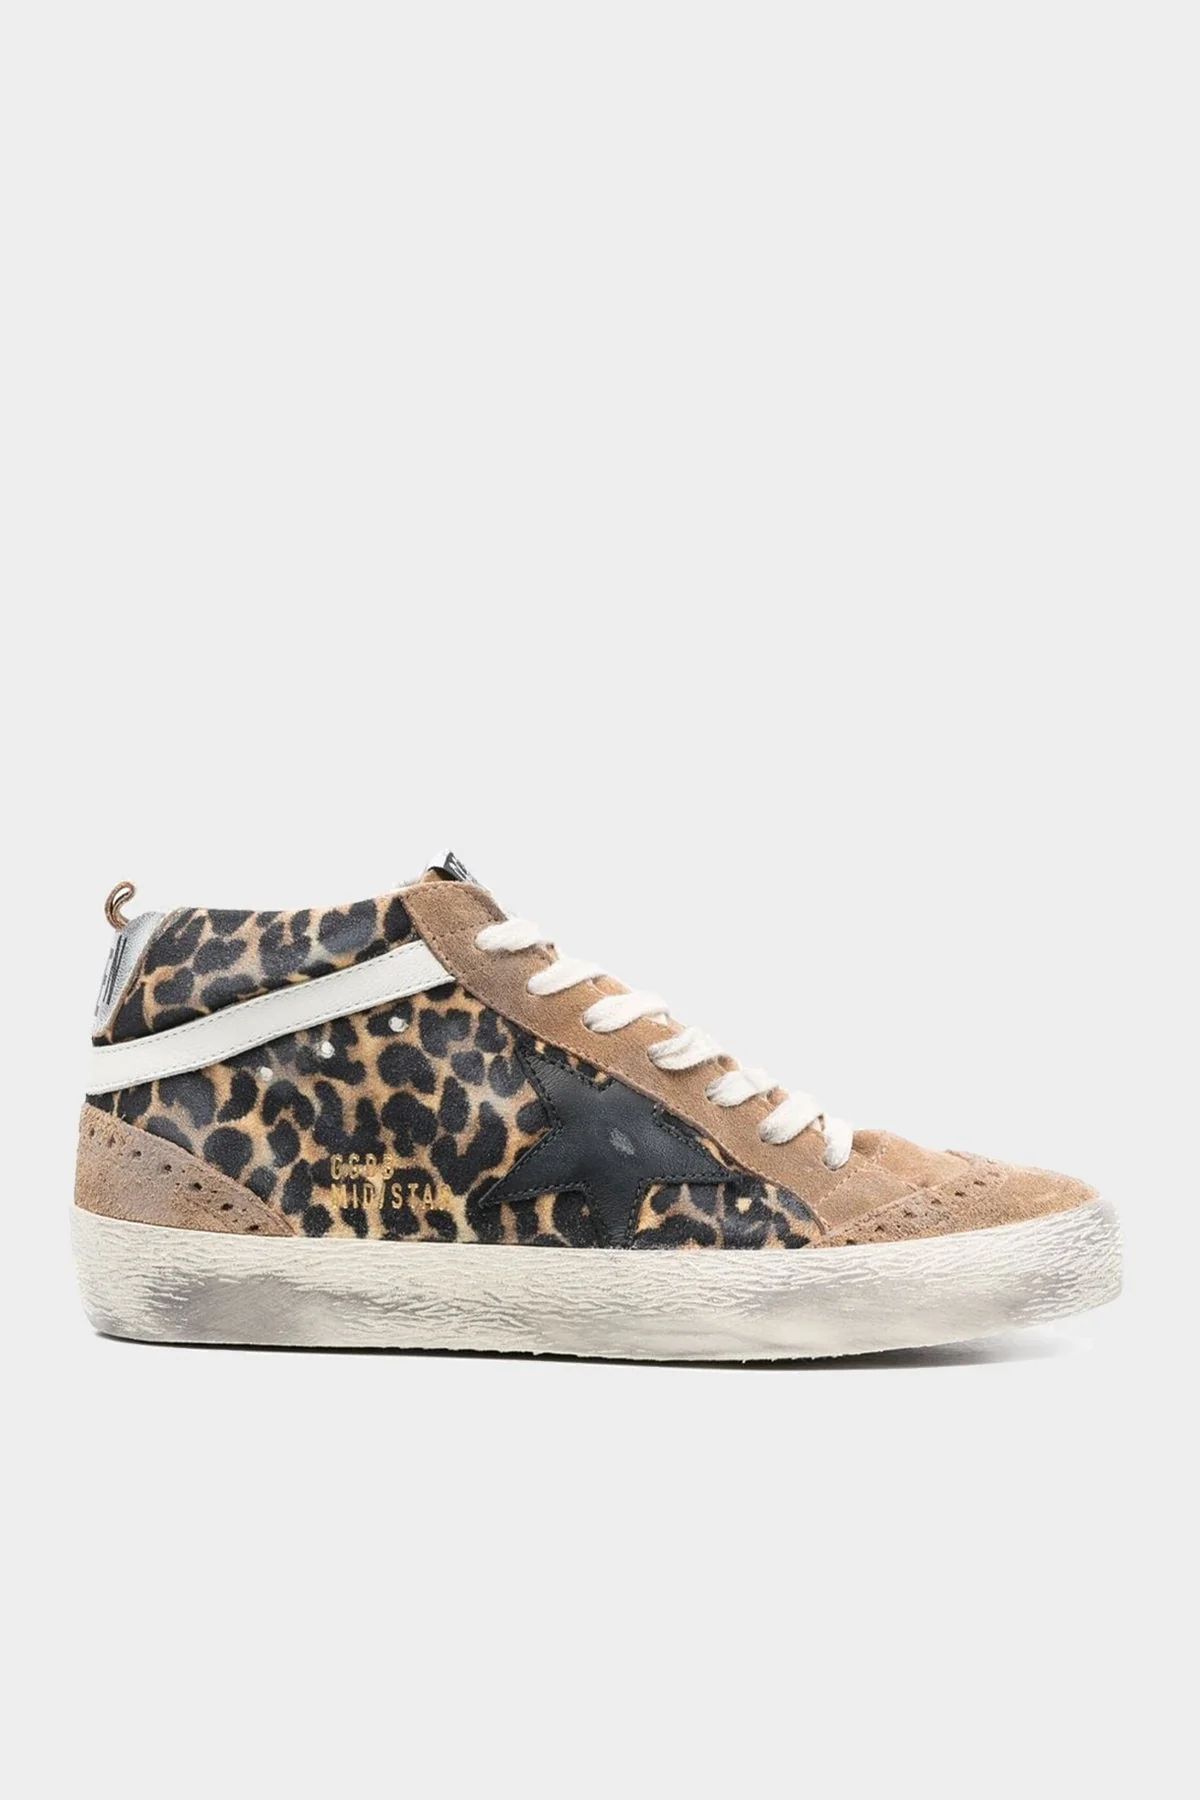 Mid-Star Leopard Suede Leather Sneaker - EU 40 | Shop Olivia